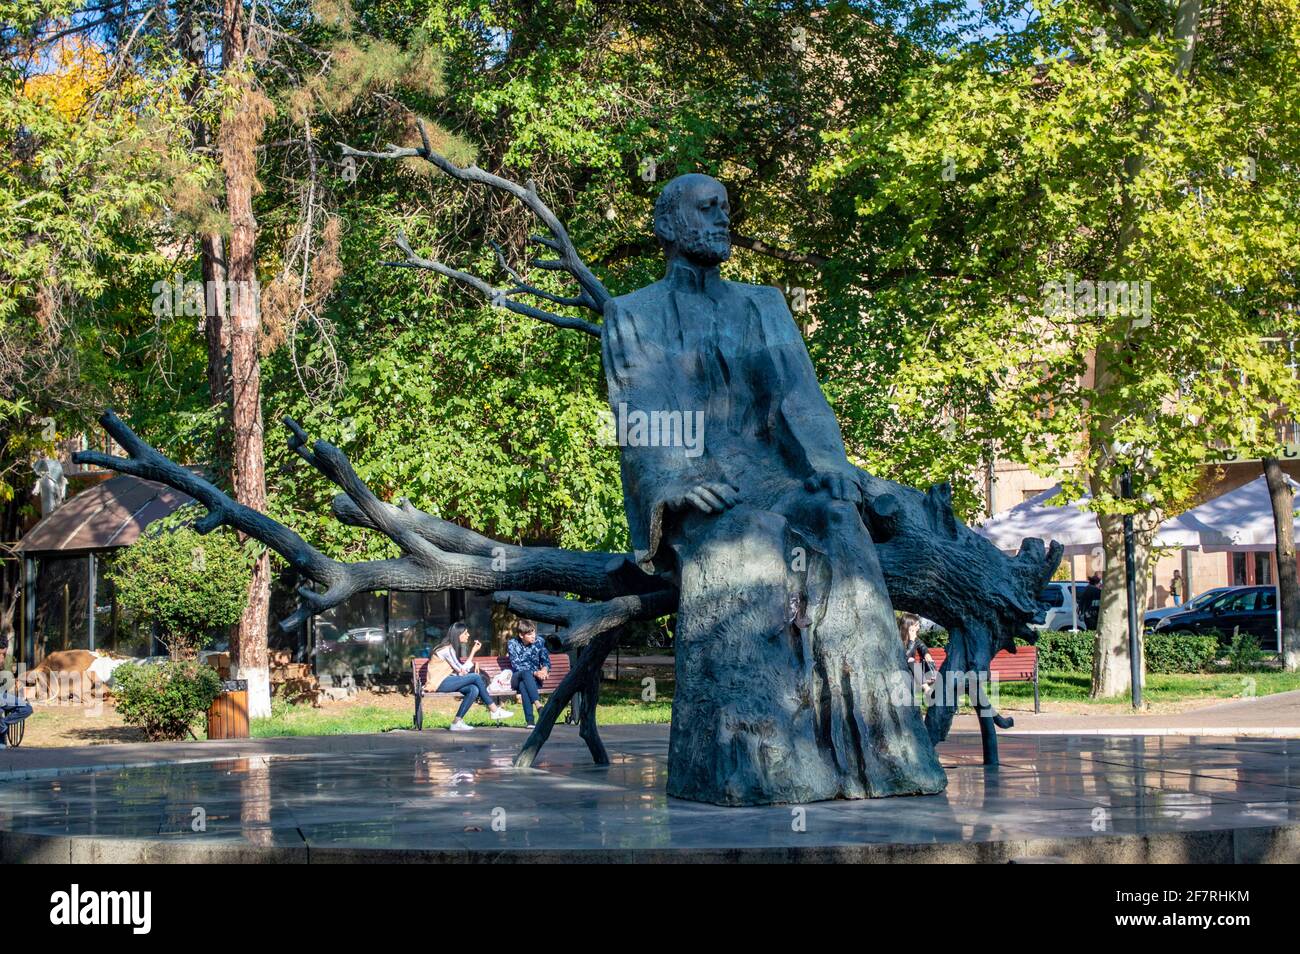 Yerevan, Armenia - October 31, 2019: Statue of Komitas, an Armenian composer and musicologist, in downtown Yerevan, Armenia Stock Photo